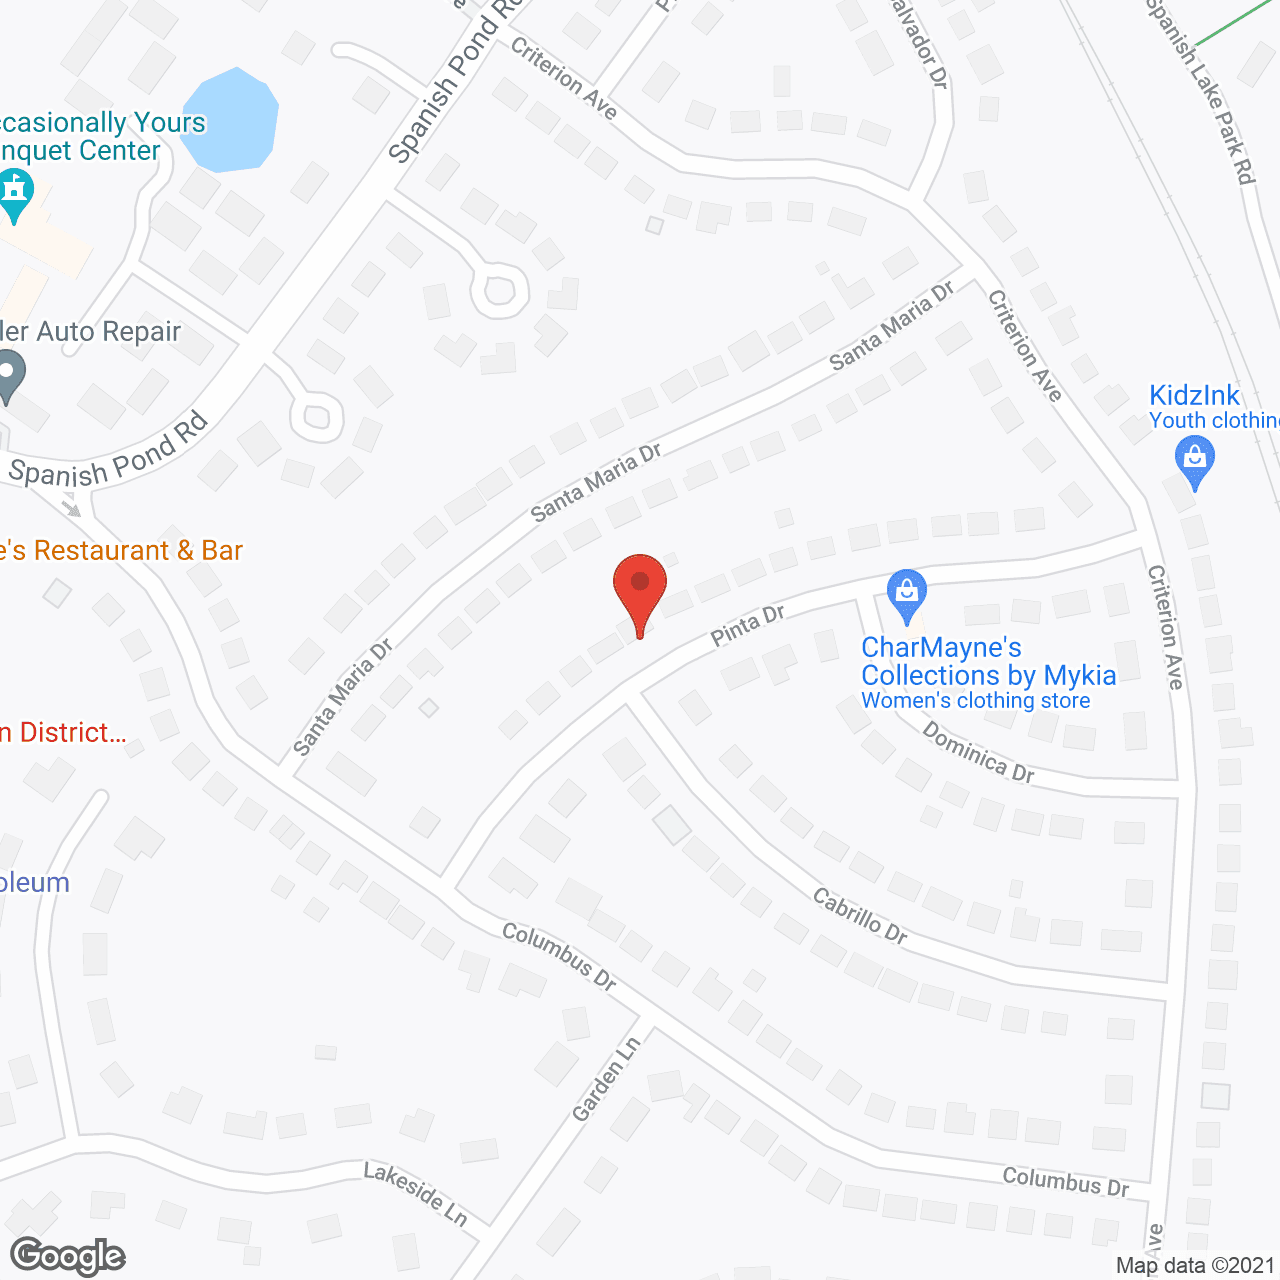 Trinity Park Senior Apartments in google map